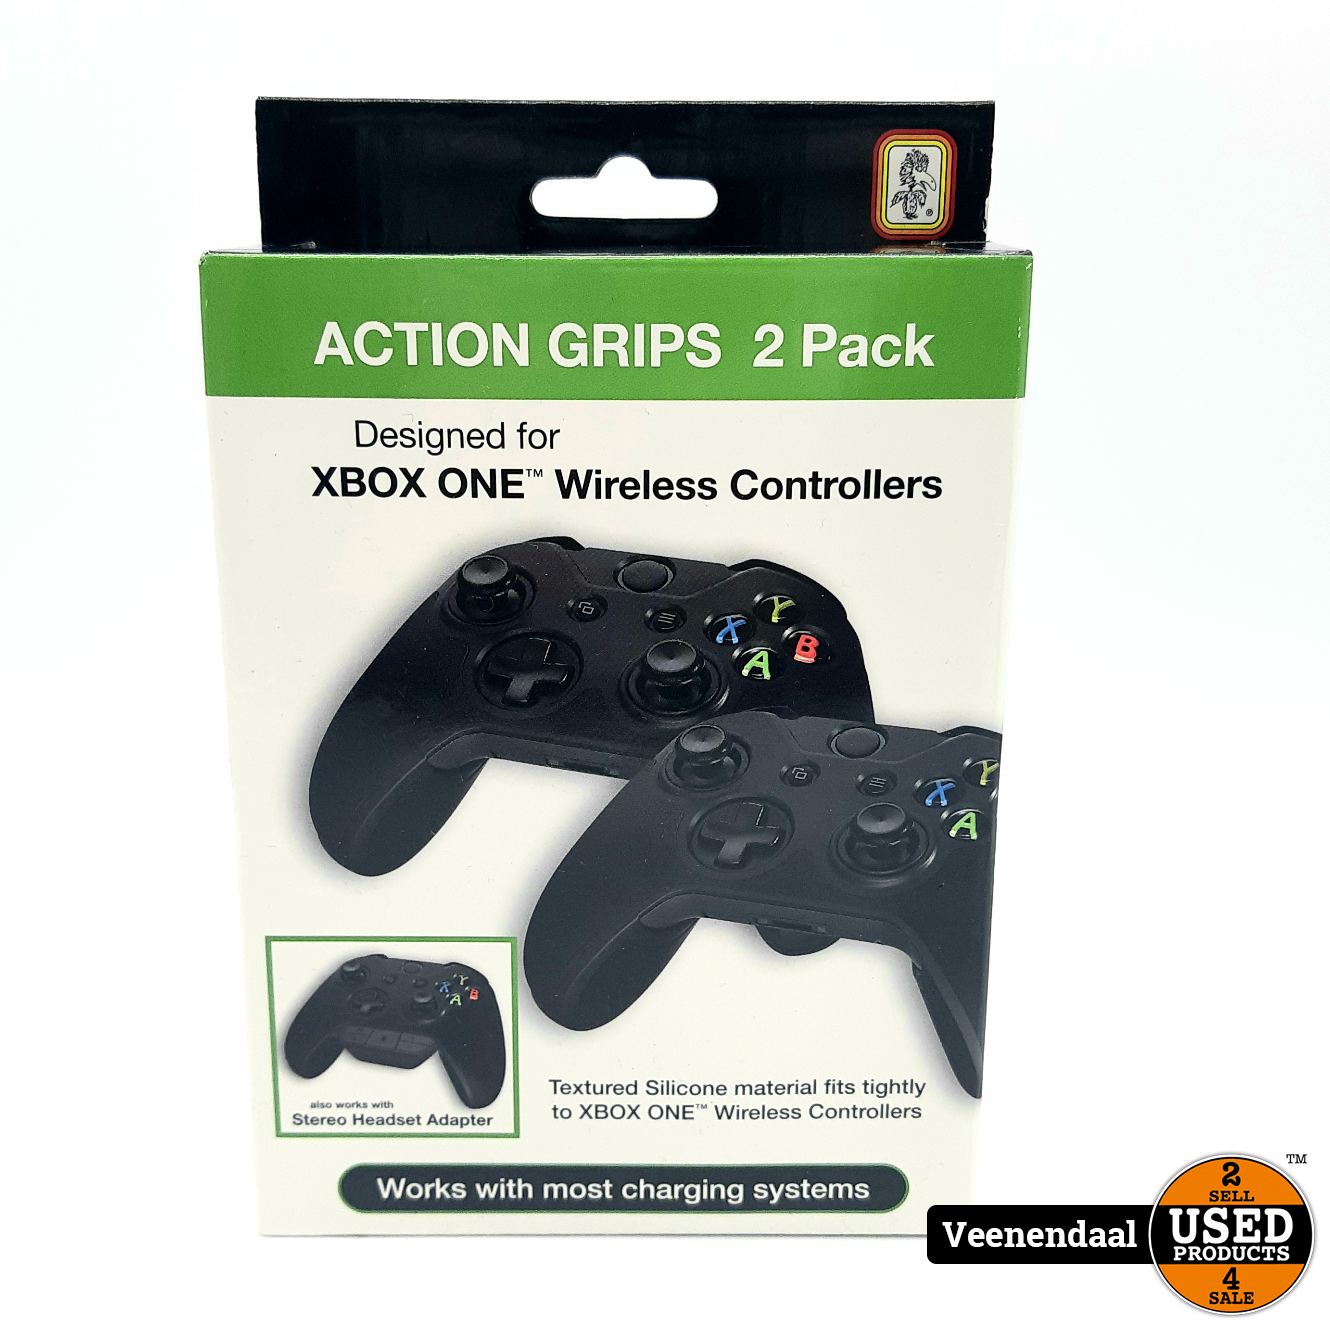 glas Beweegt niet Uitgebreid xbox one Xbox One Action Grip 2 Pack Zwart - Nieuw In Doos - Used Products  Veenendaal